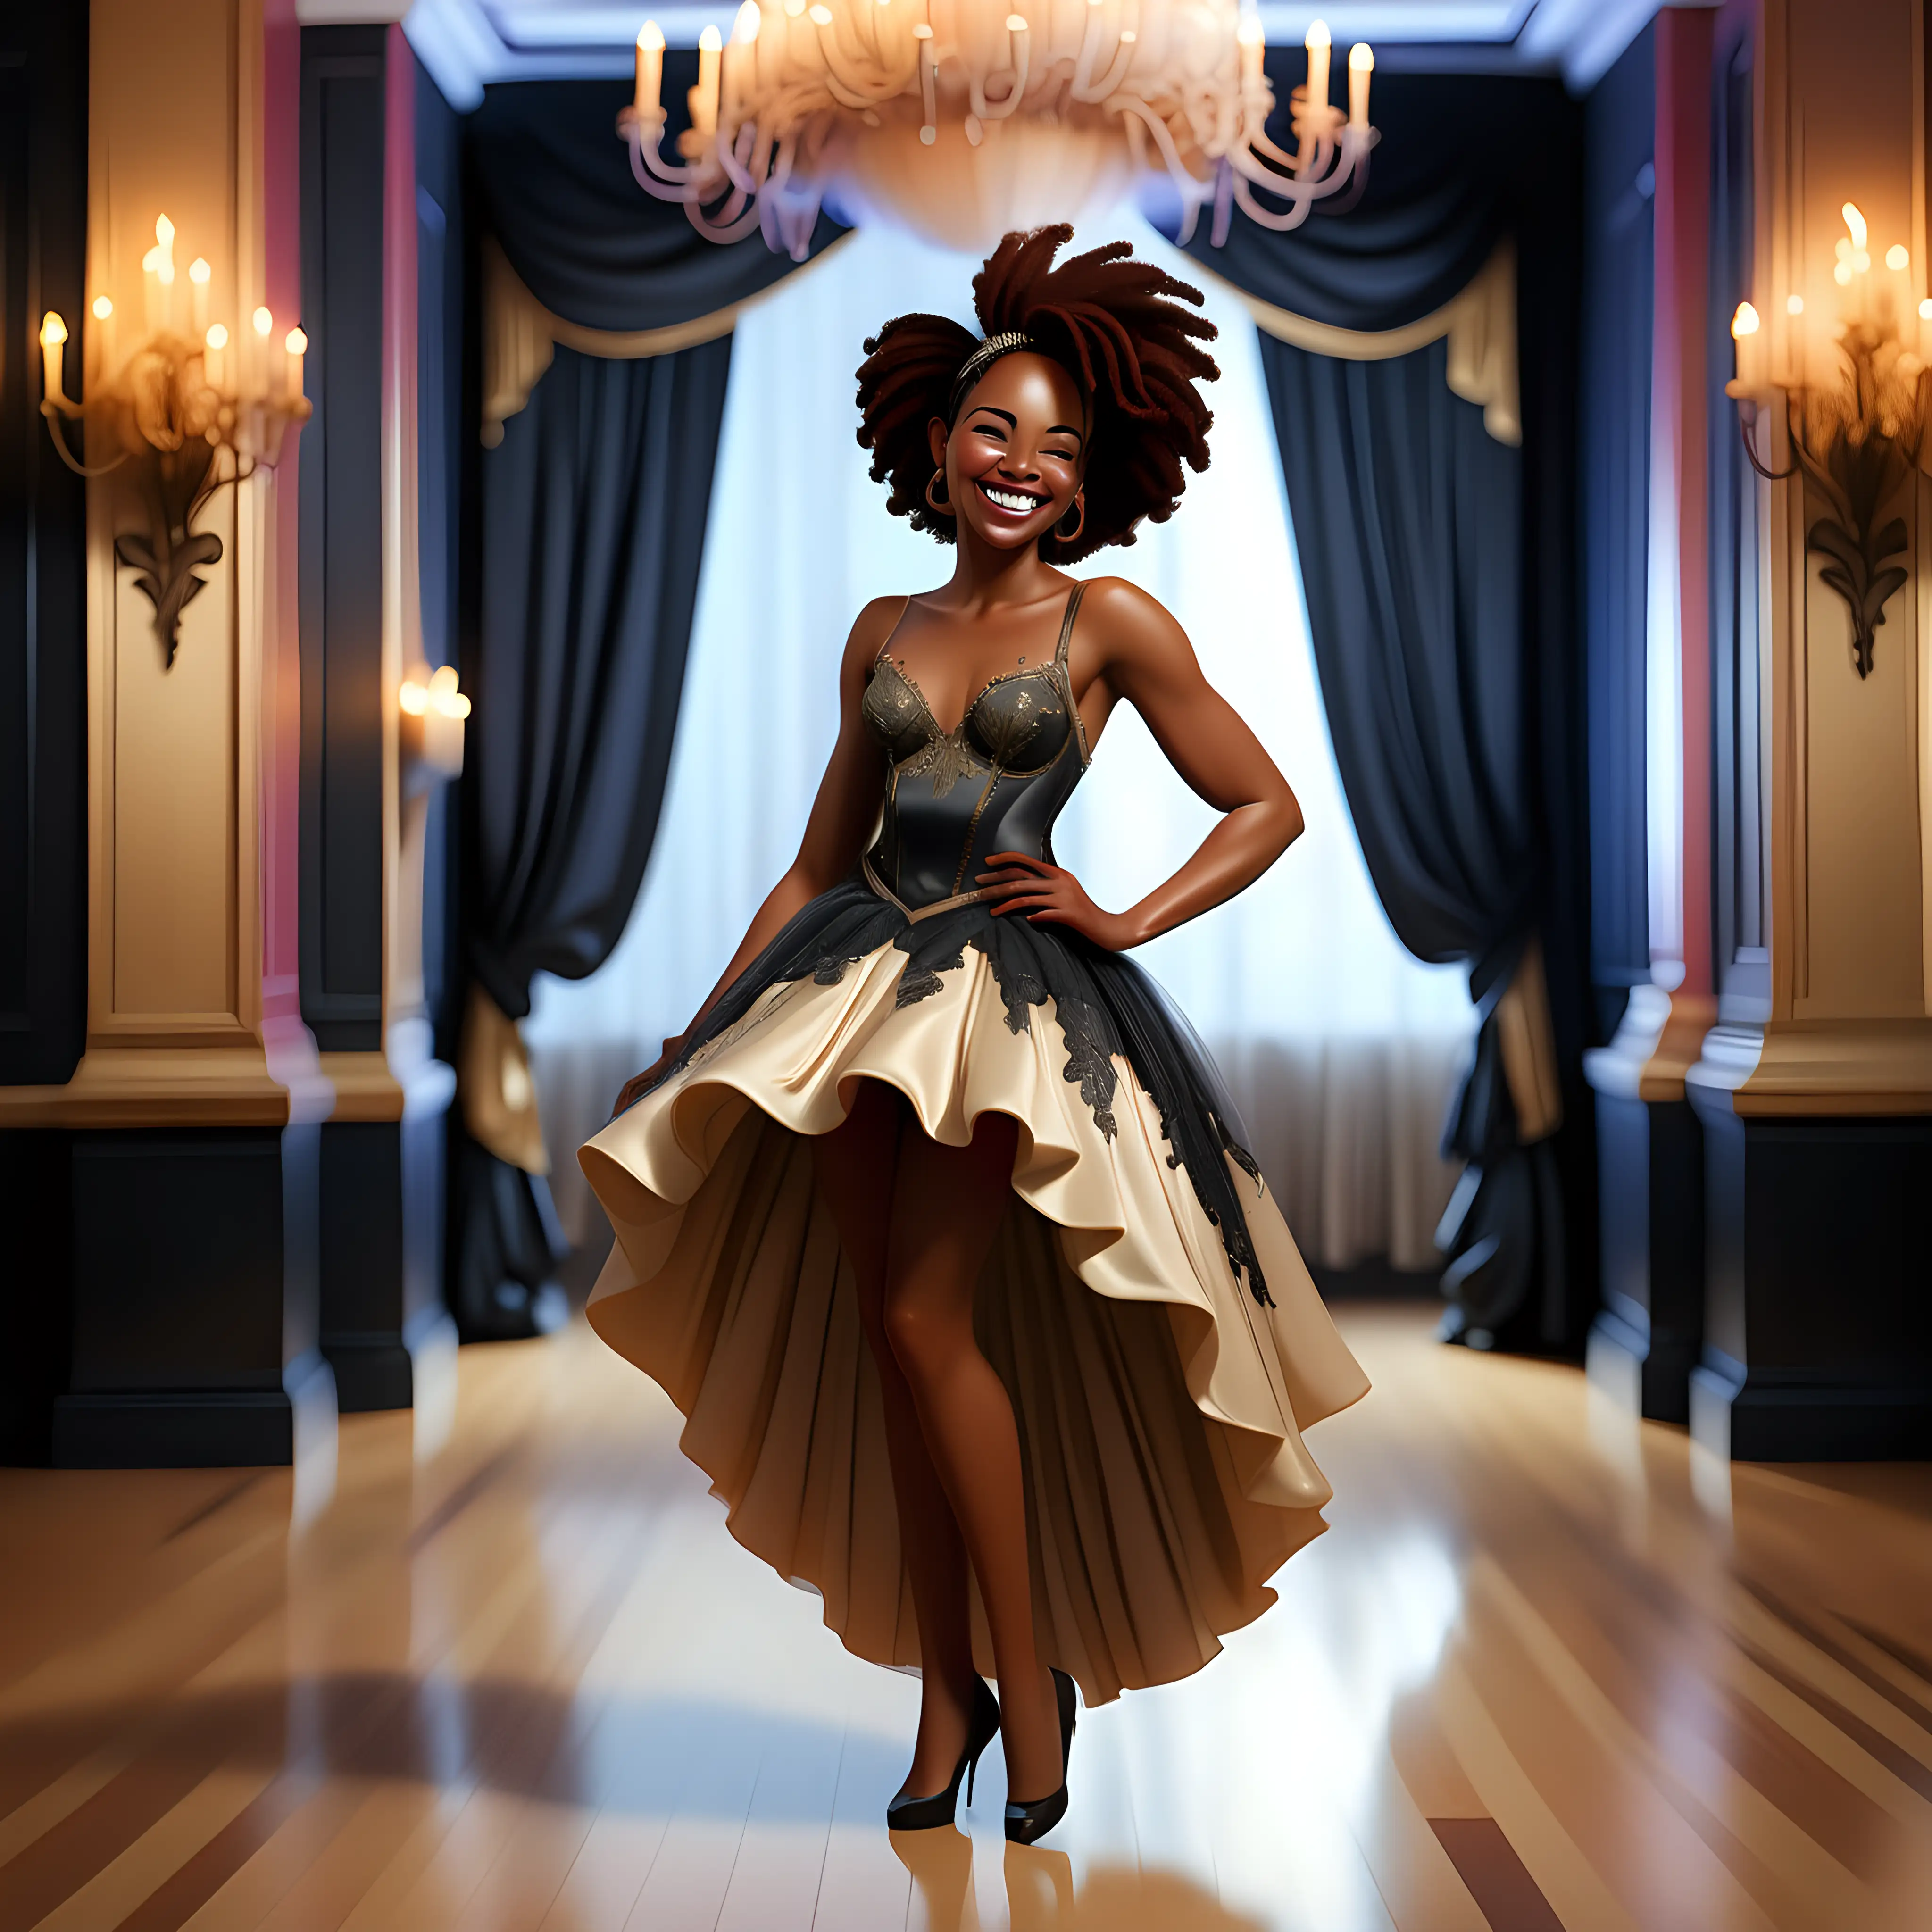 Elegant Black Woman Smiling in Ballroom Dress Portrait